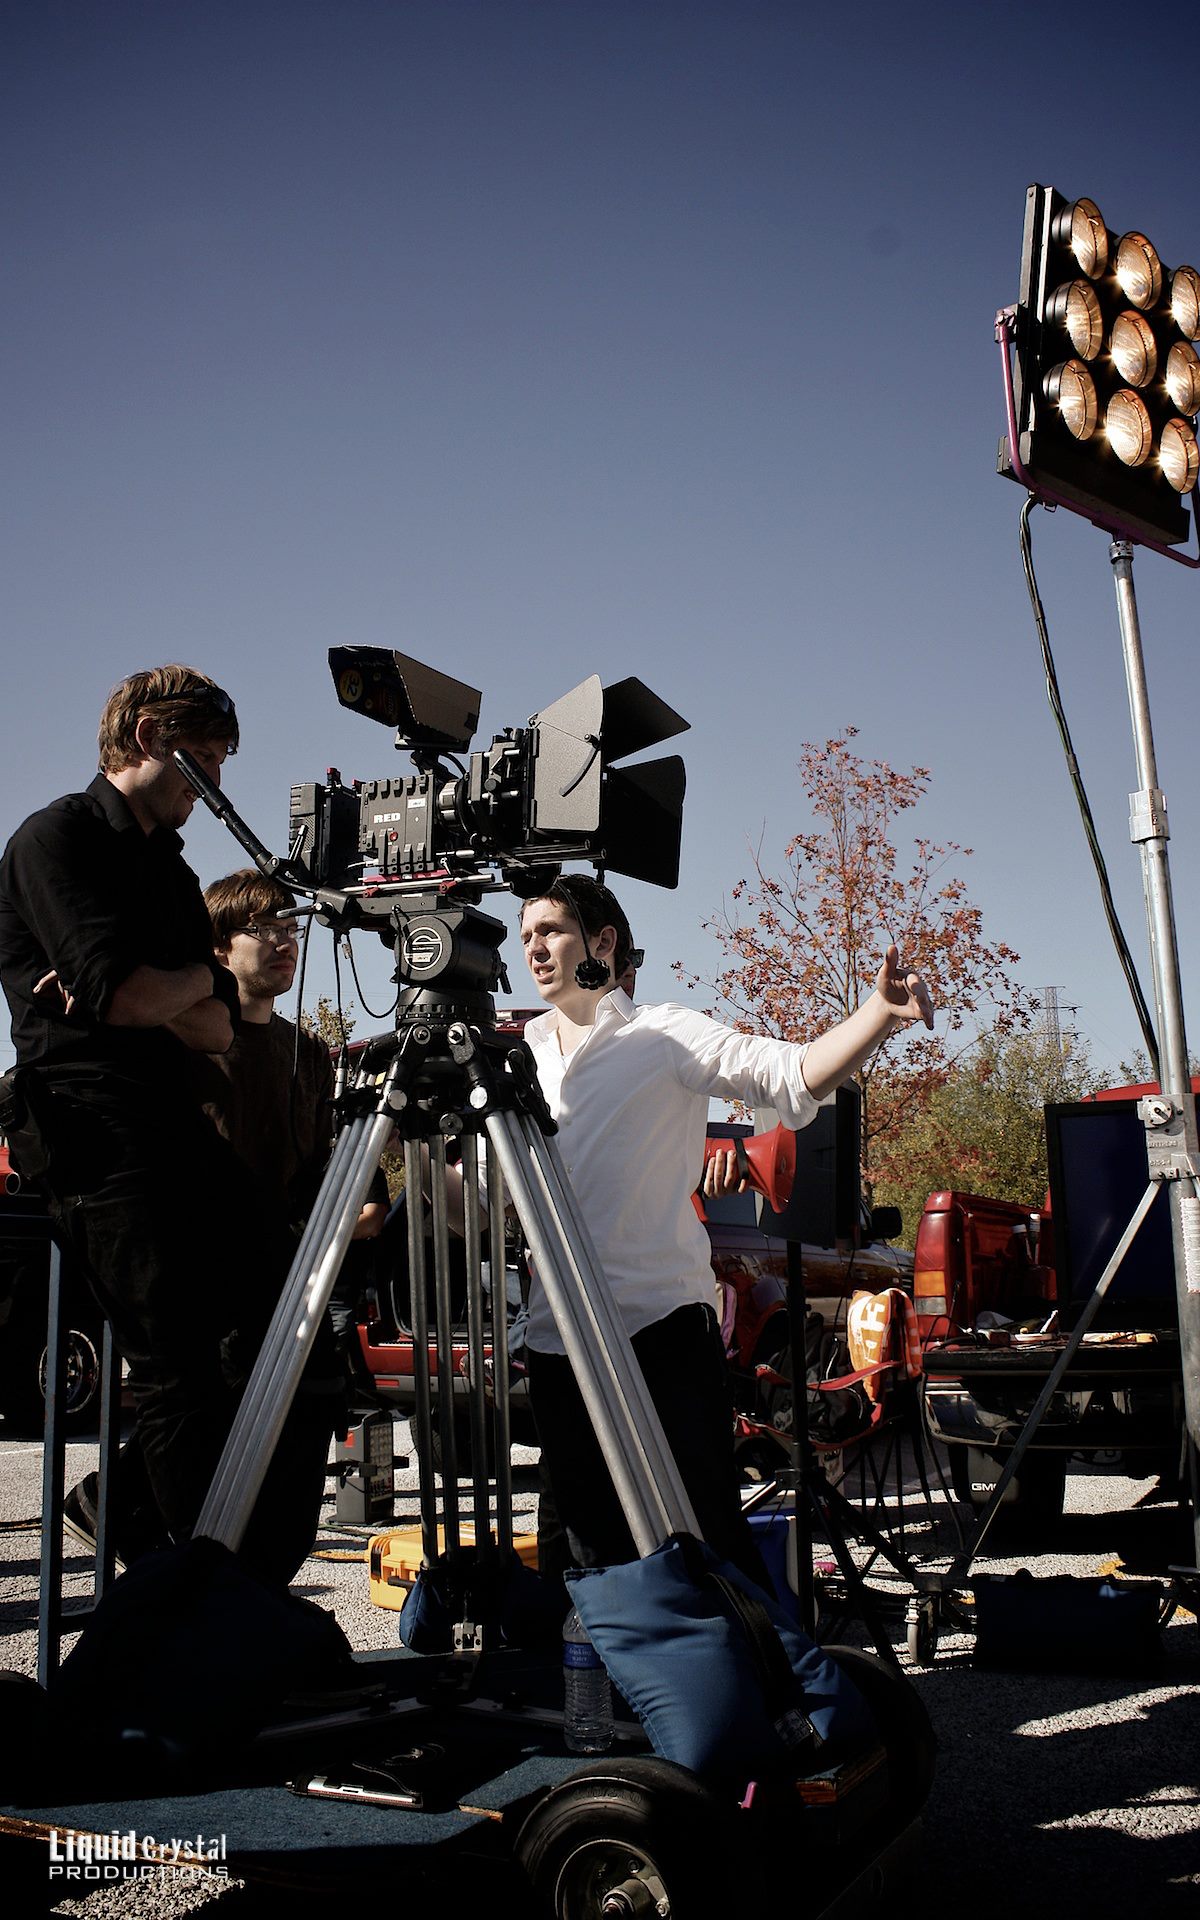 Director Brian Harstine and Cinematographer Matt Satterfield